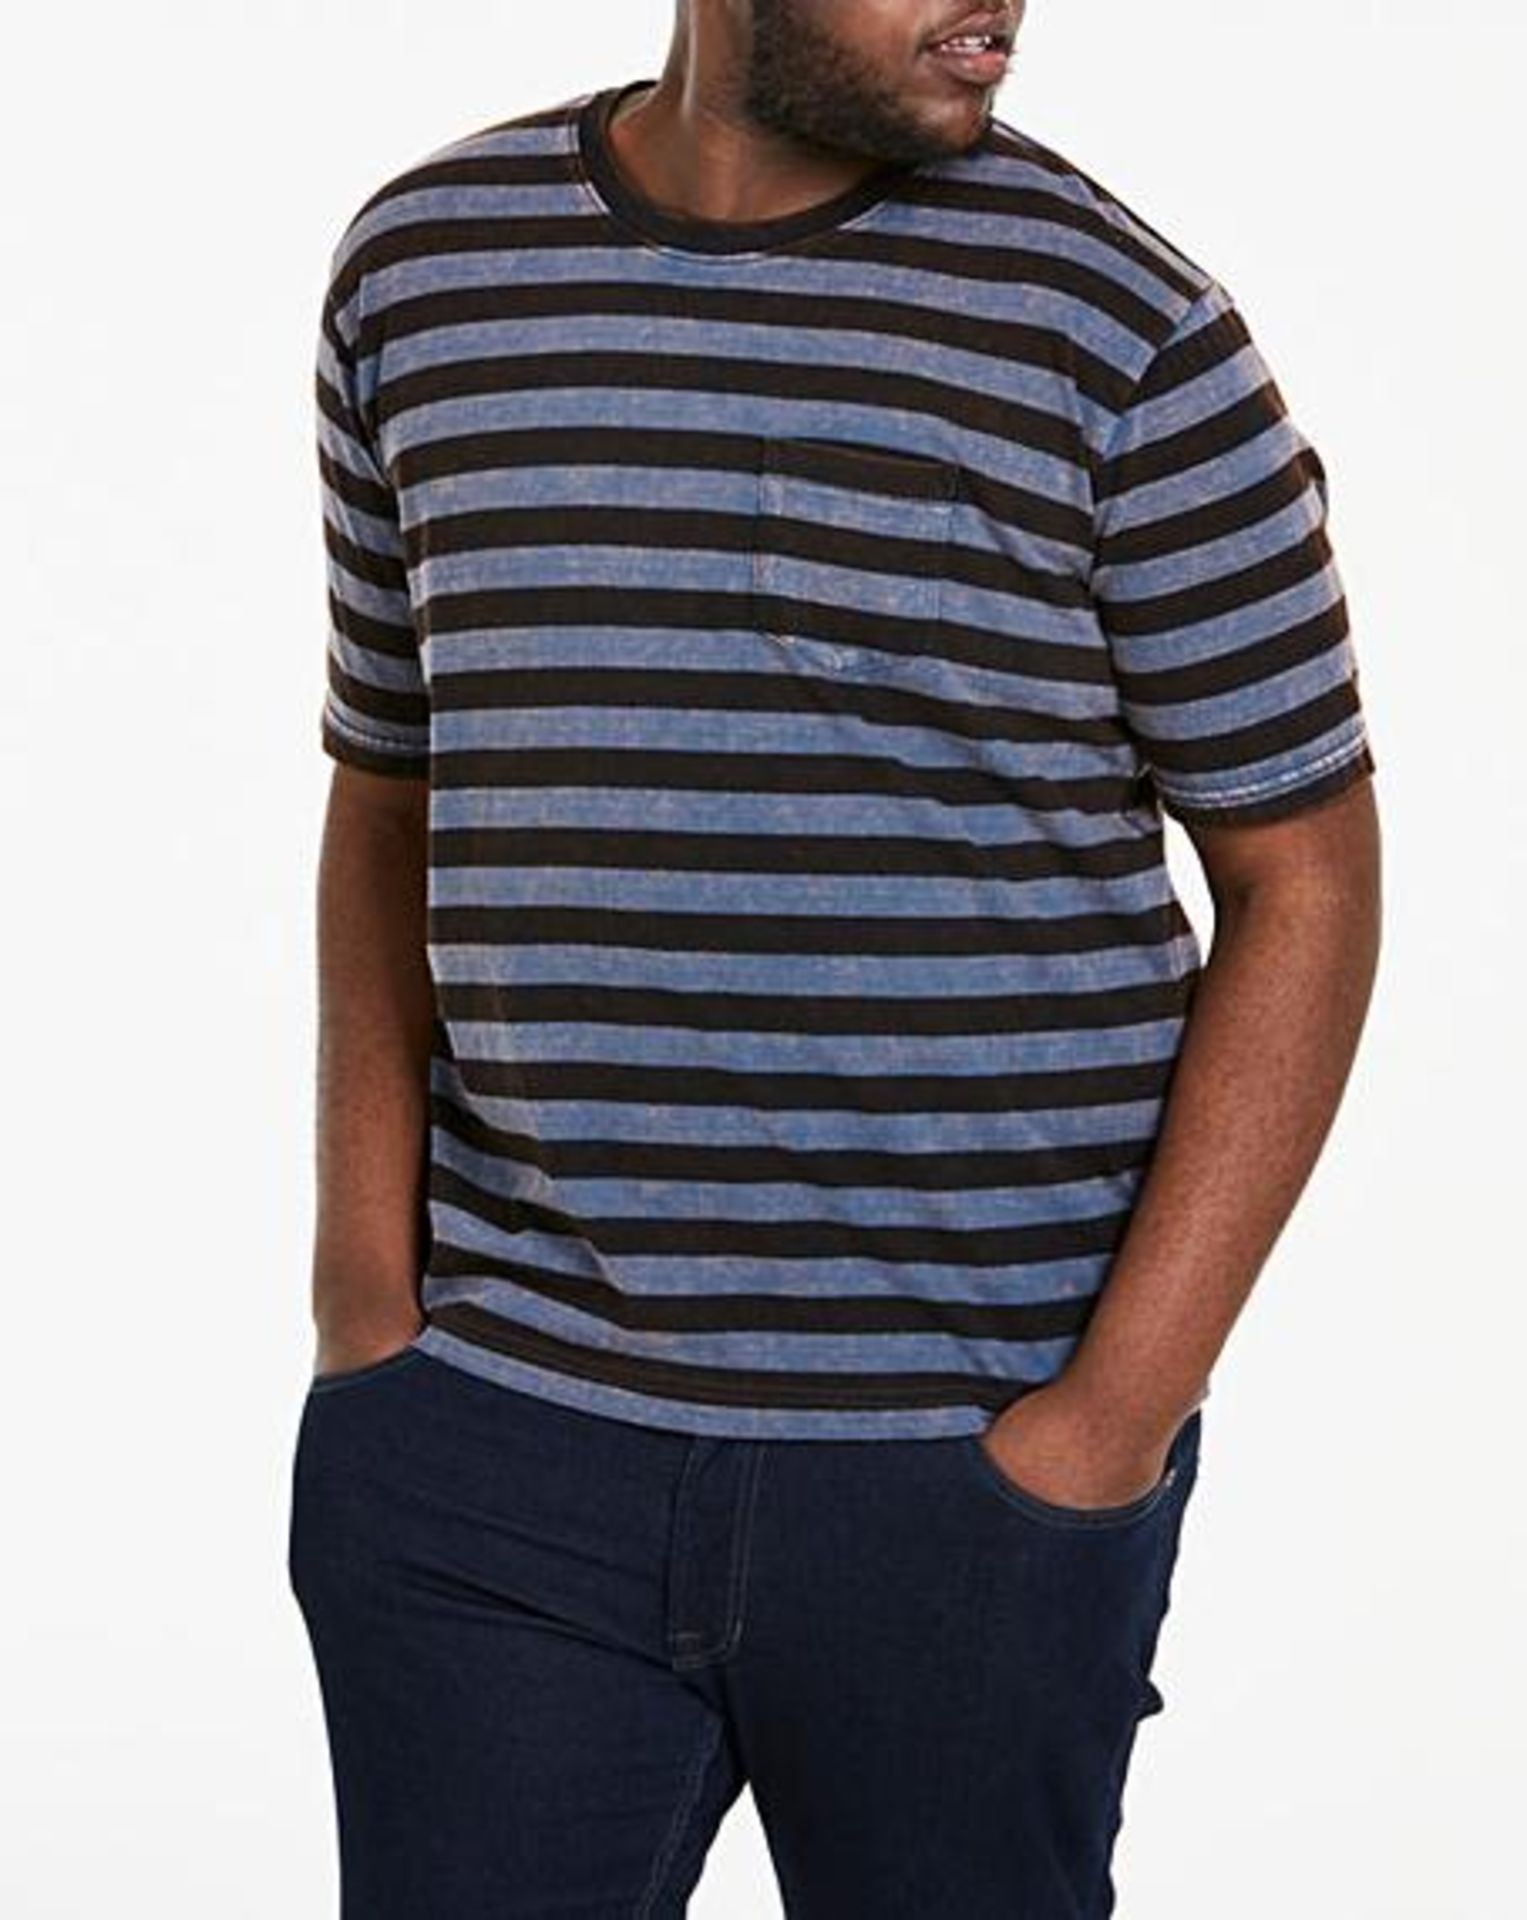 Brand New Jackimo Blue And Black Stripe Gents T-Shirts In Assorted Sizes Ranging From XXL - XXXXXL